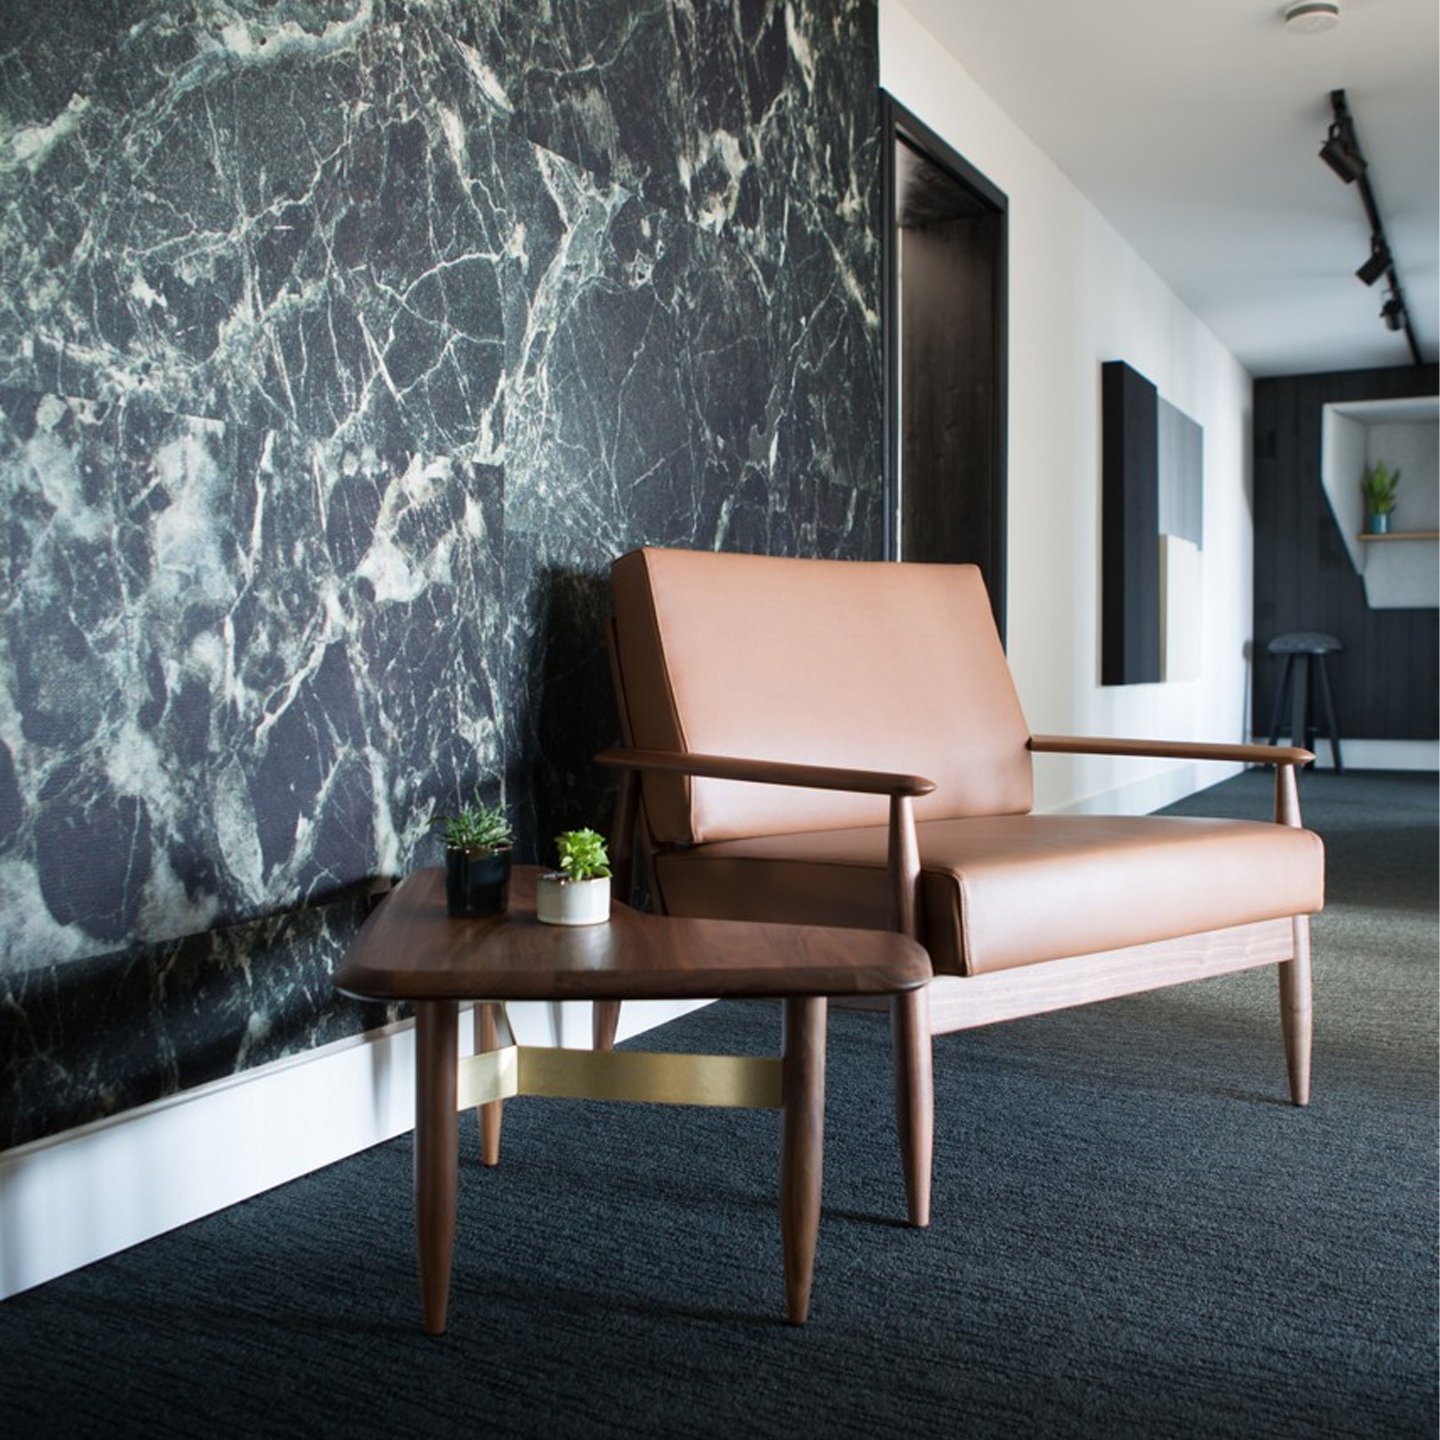 Haworth Buzzi Nordic ST100 lounge sofa in tan leather in a lobby